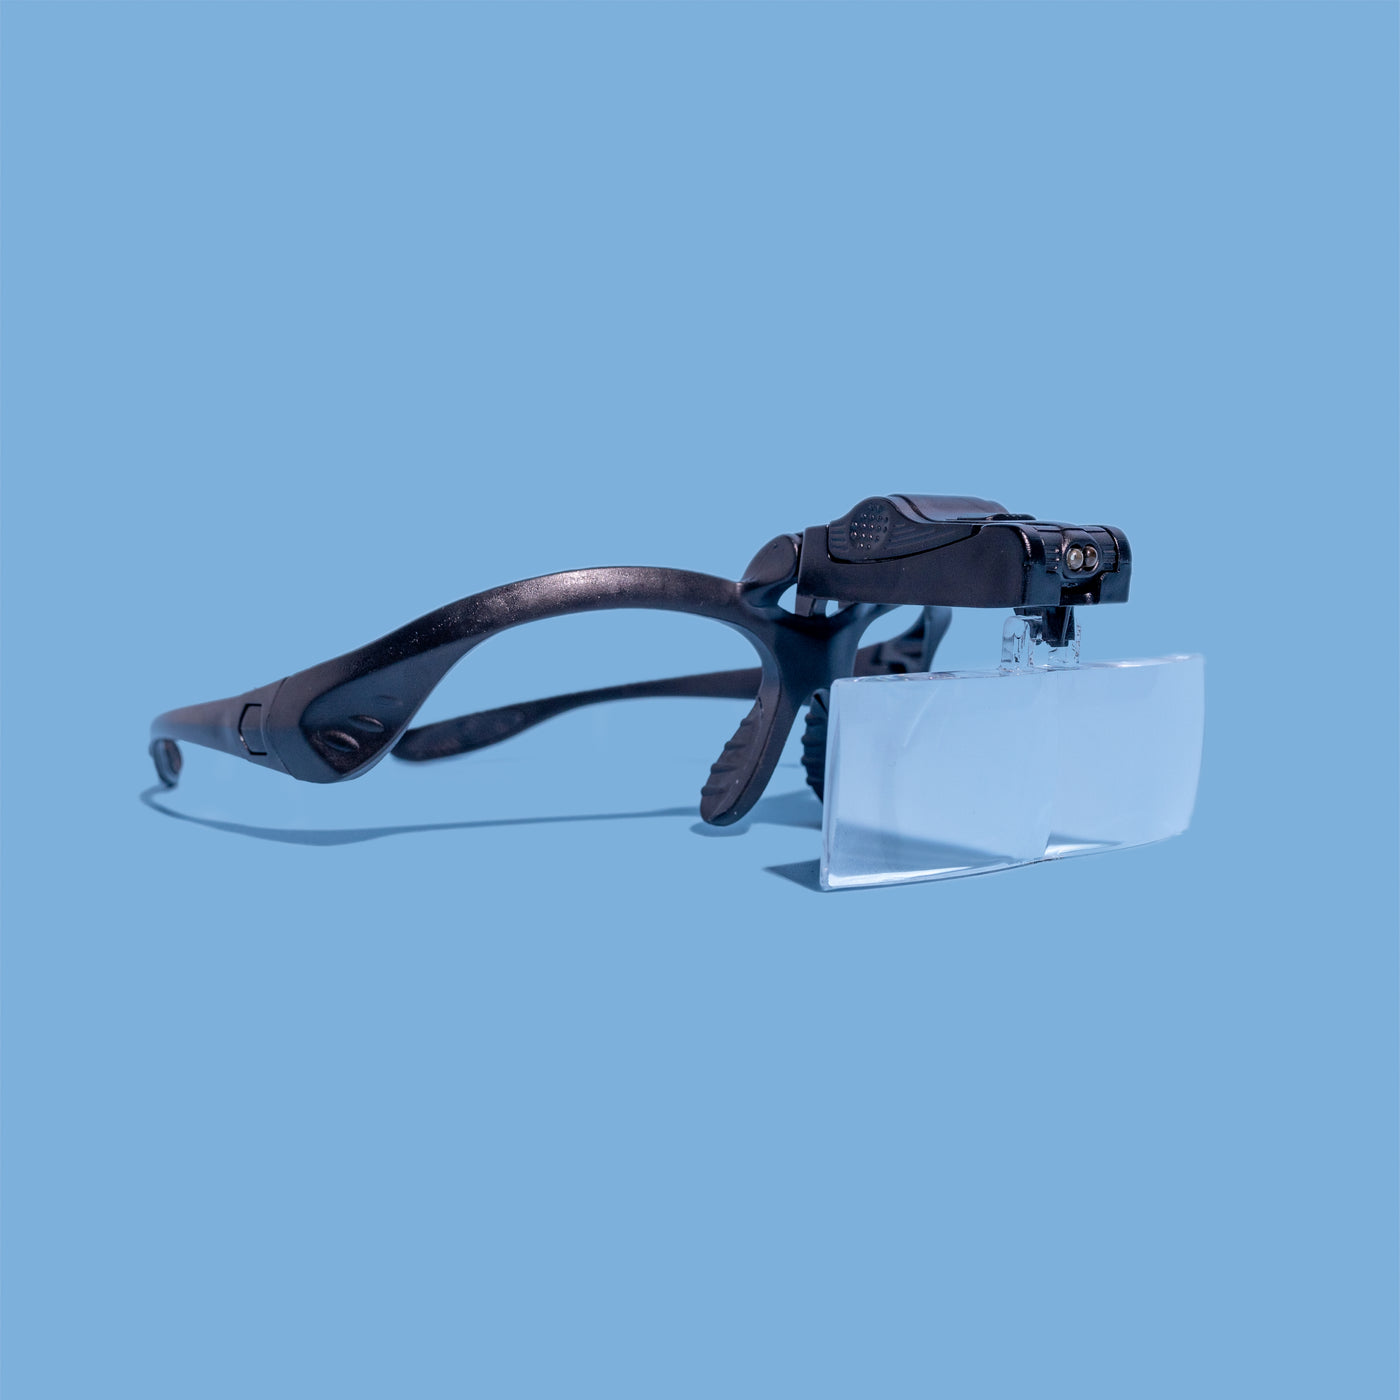 Magnifier Glasses